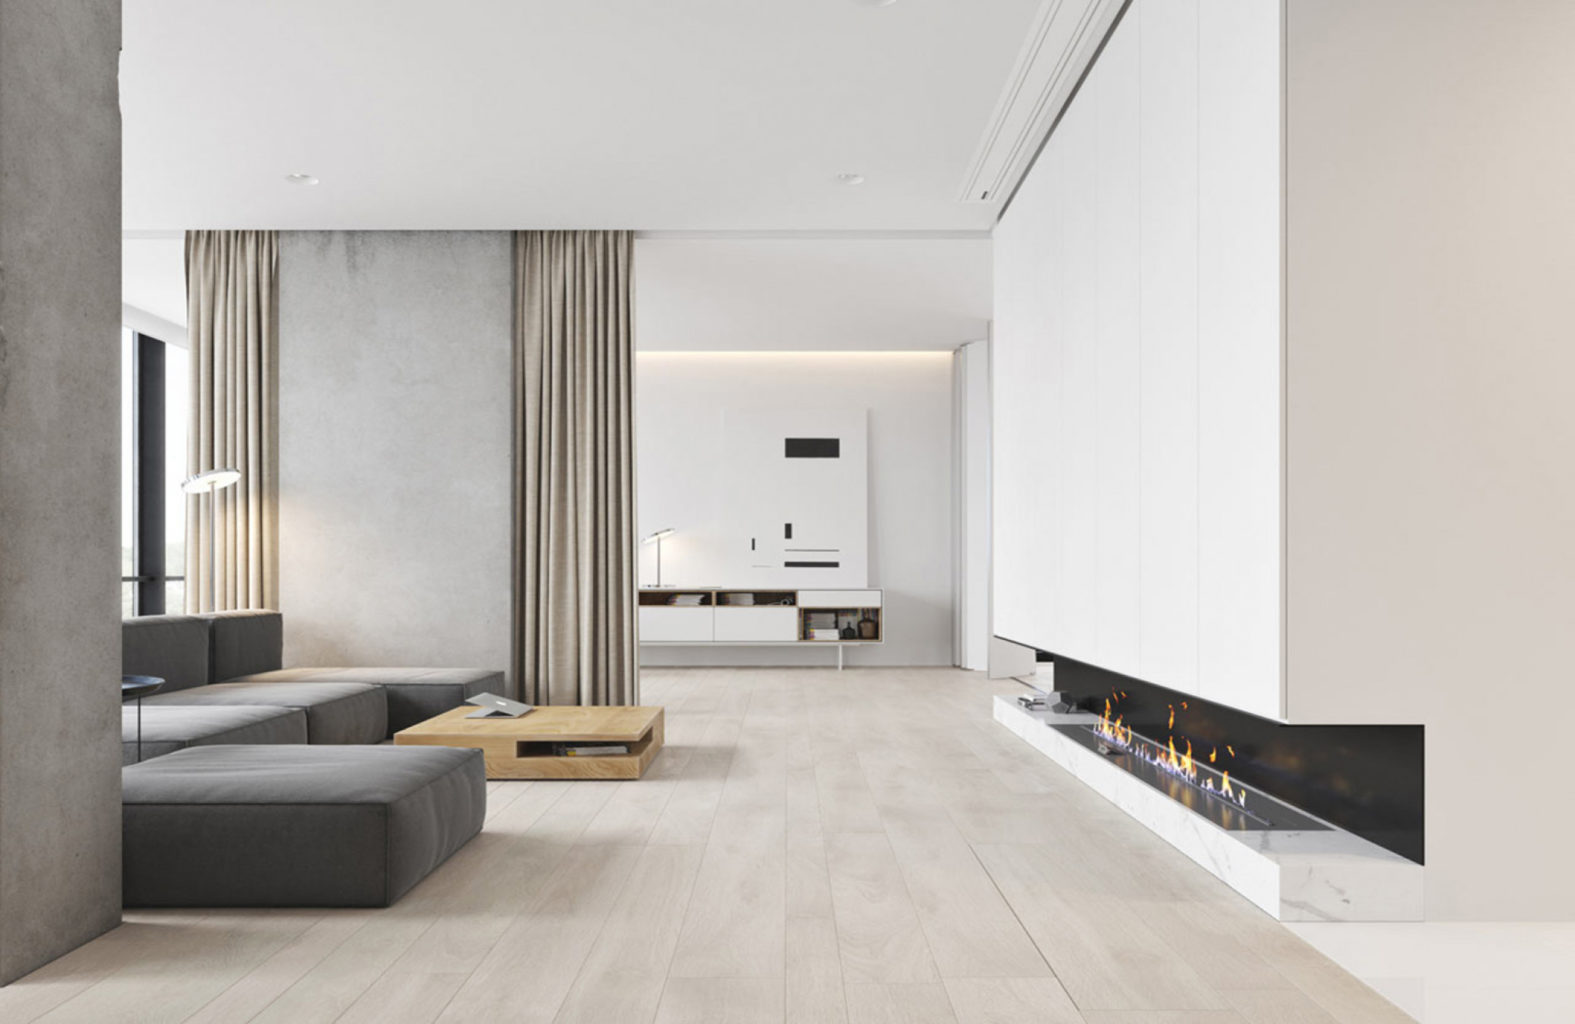 Модерн в дизайне интерьера двухкомнатной квартиры